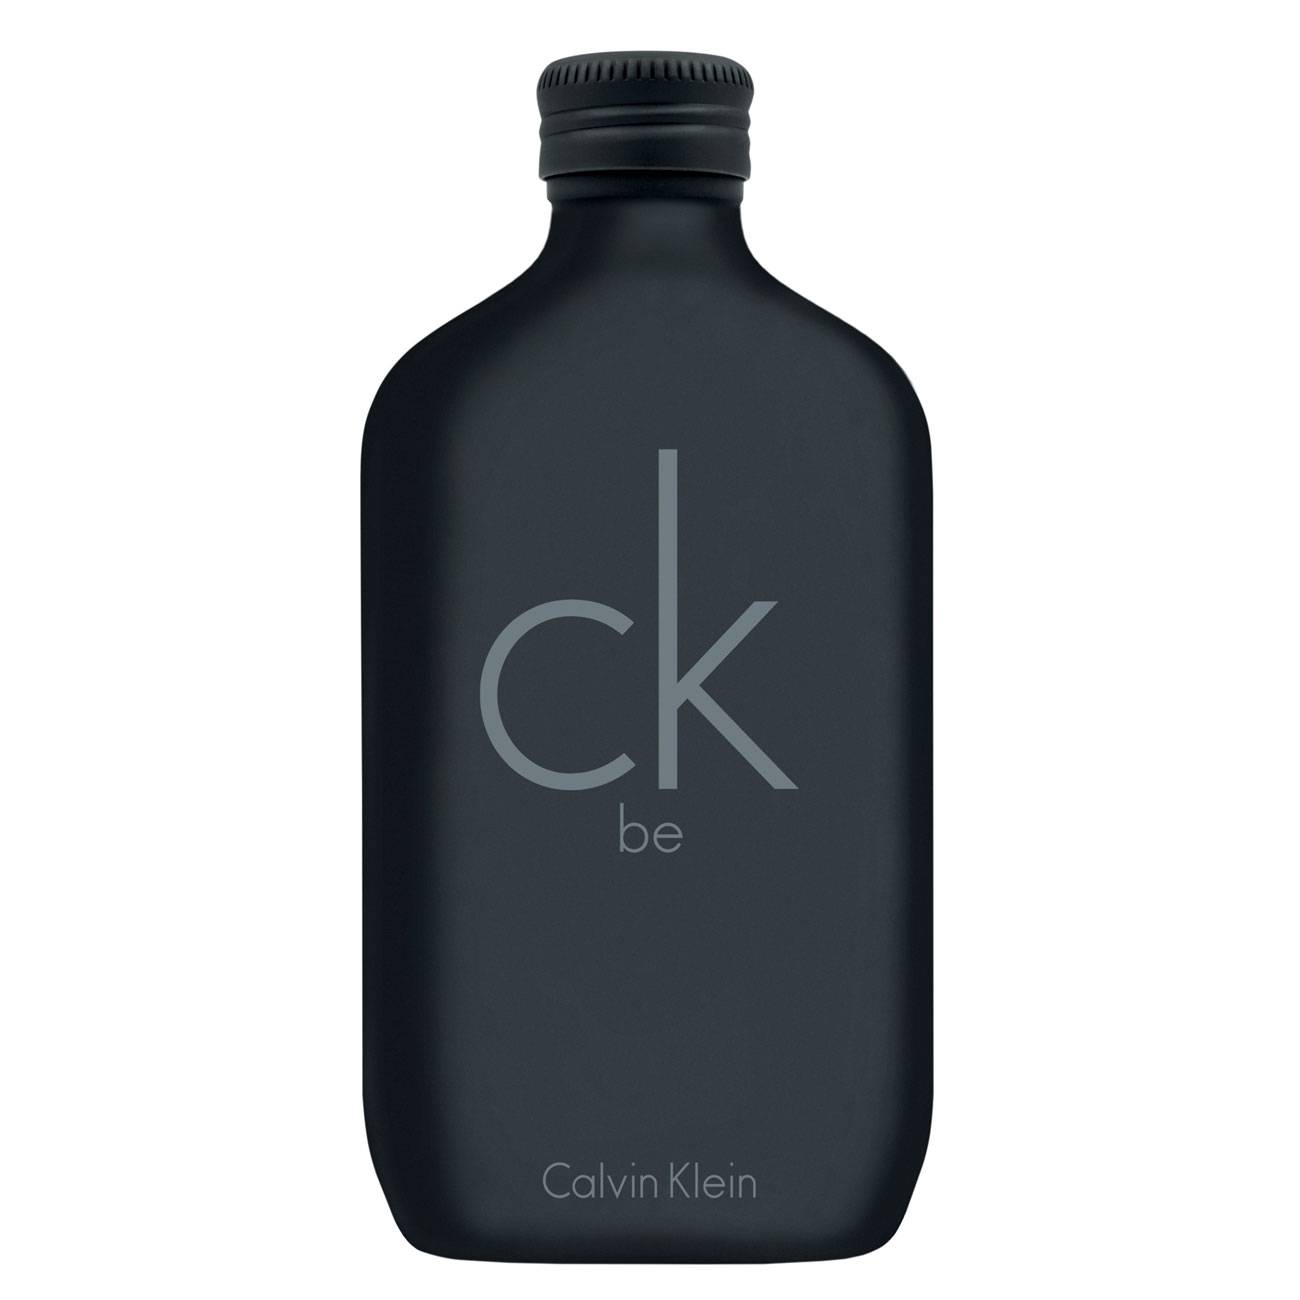 Apa de Toaleta Calvin Klein CK BE 200ml cu comanda online